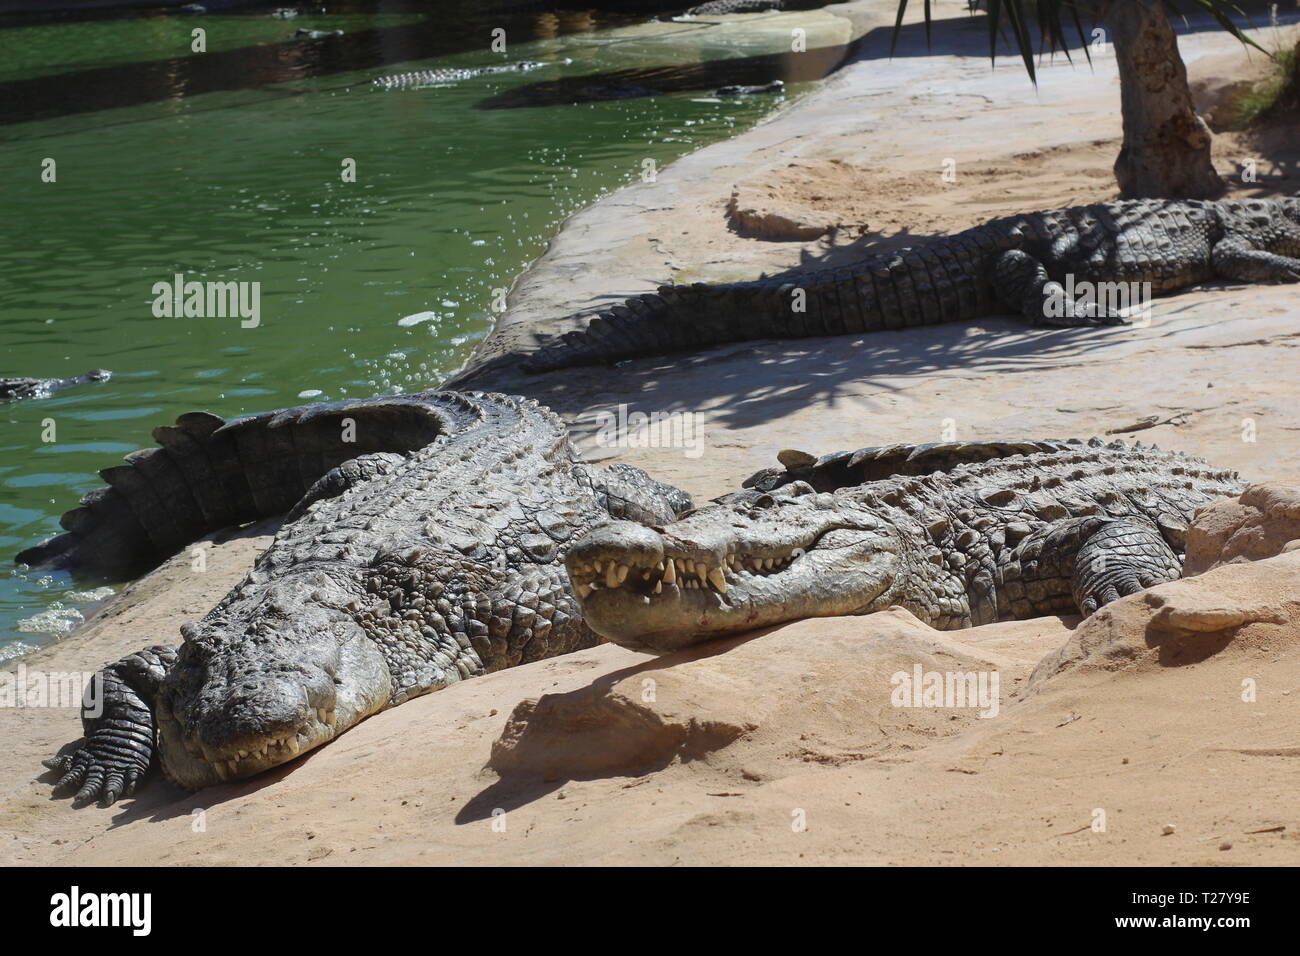 Krokodile in der Sonne aalen, liegen auf dem Sand, Essen und frolic. Crocodile Farm. Zucht Krokodile. Krokodil scharfe Zähne. Stockfoto